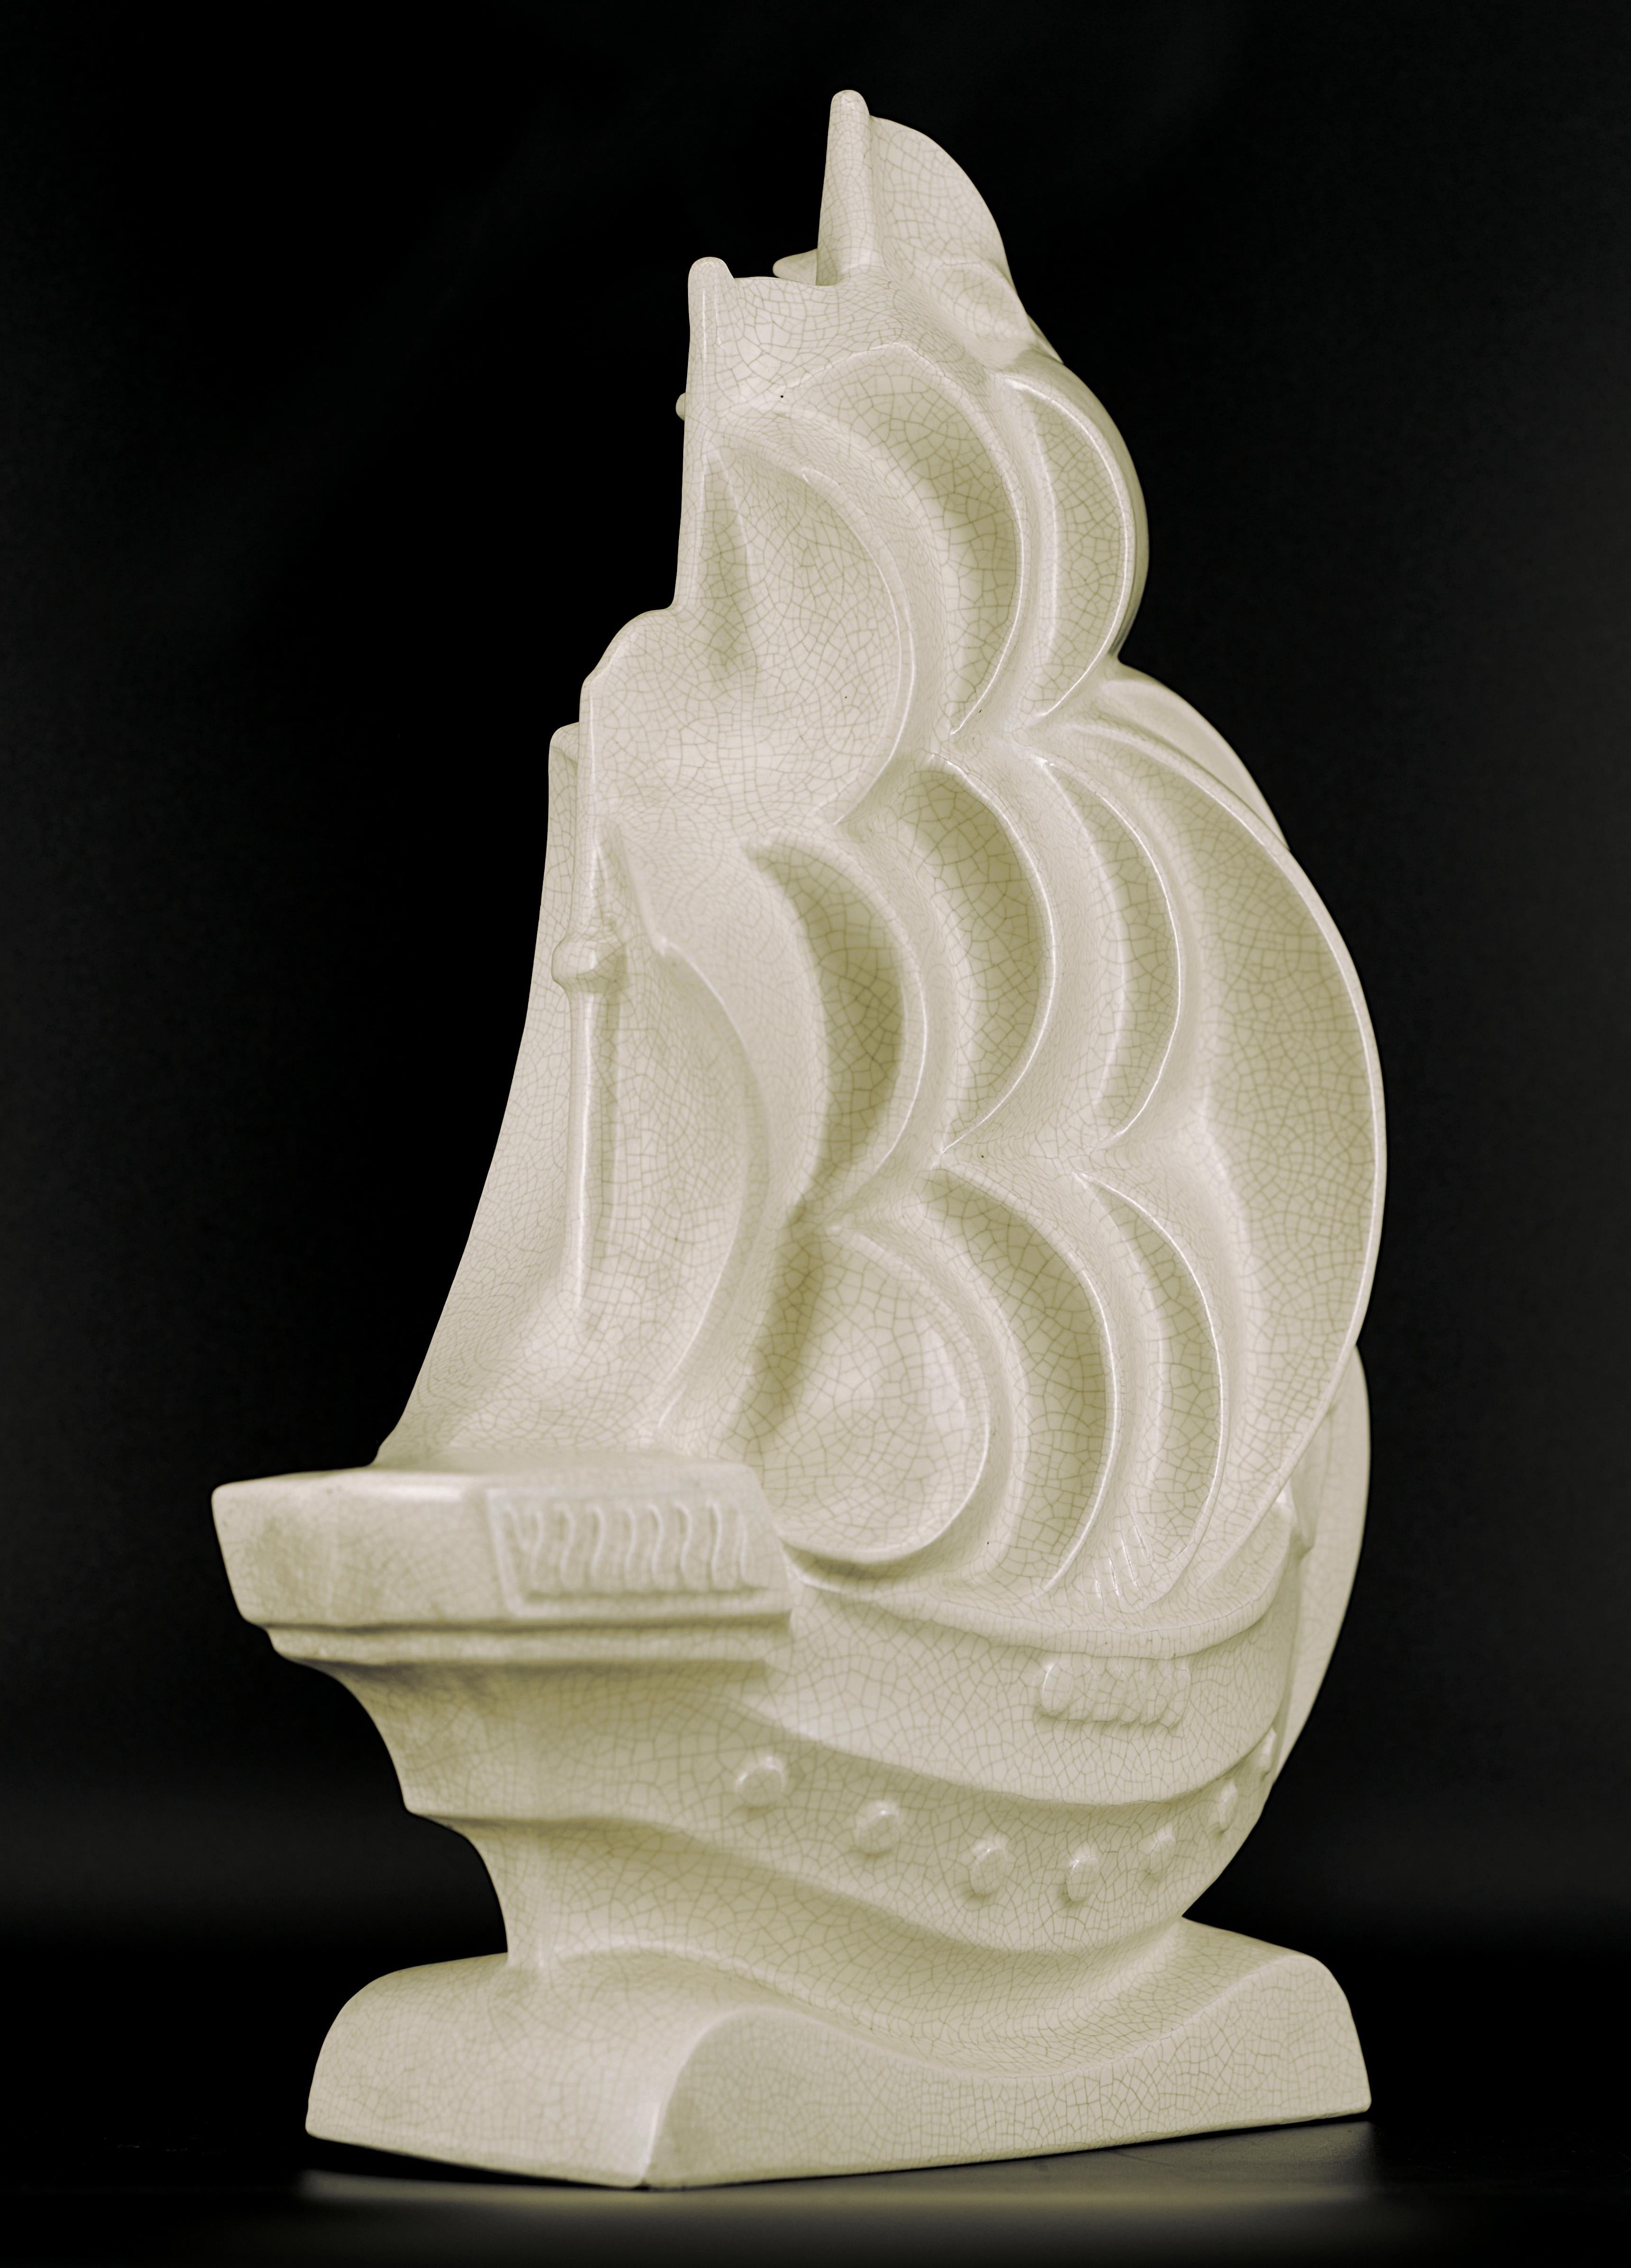 Lejan French Art Deco Crackle Glaze Ceramic Ship Sculpture at Orchies's, 1930 For Sale 3